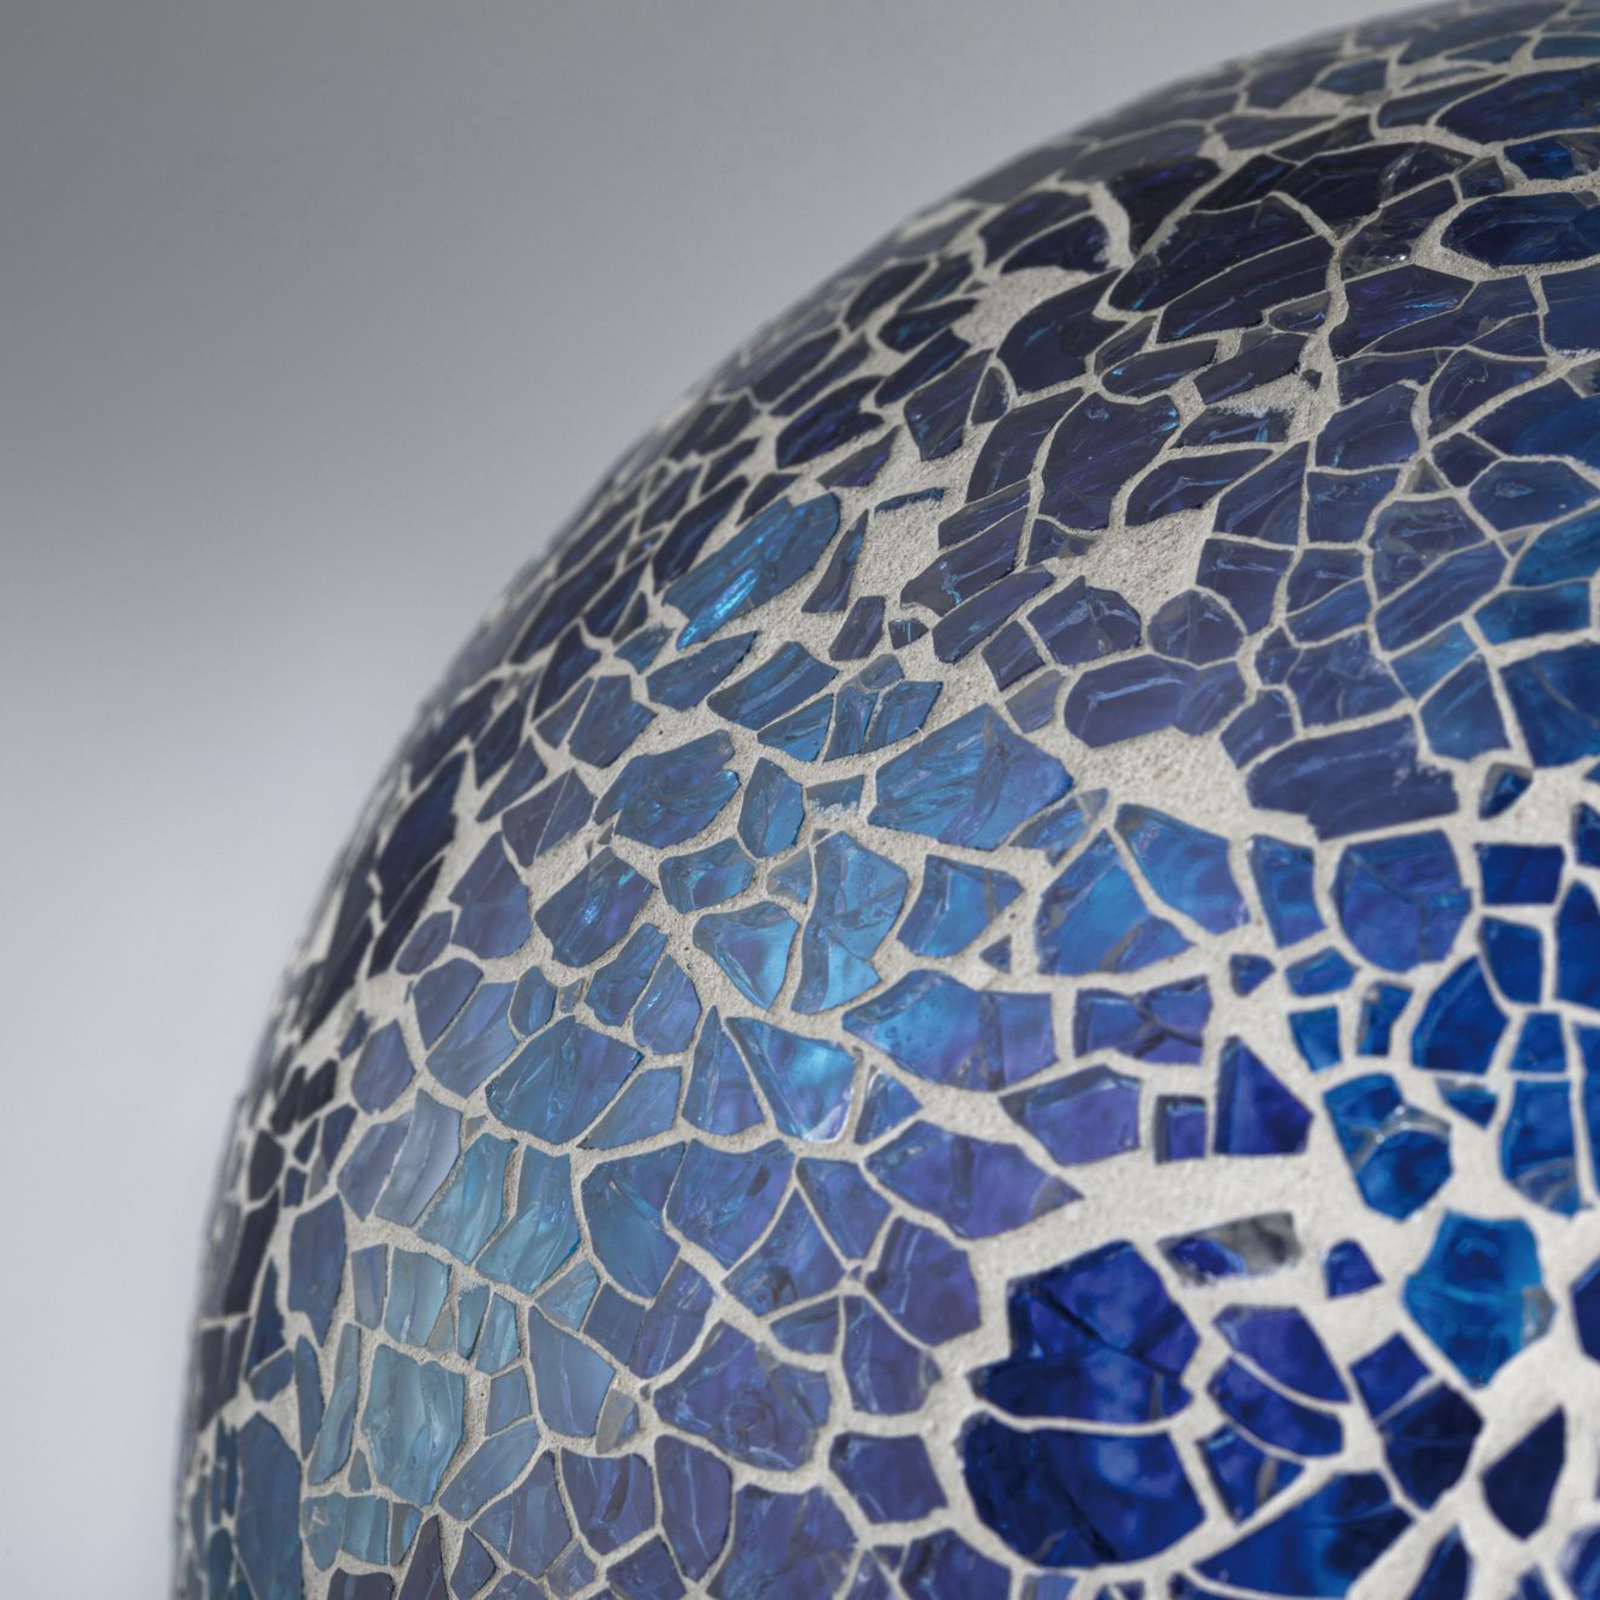 Paulmann E27 LED guľa 5W Miracle Mosaic modrá